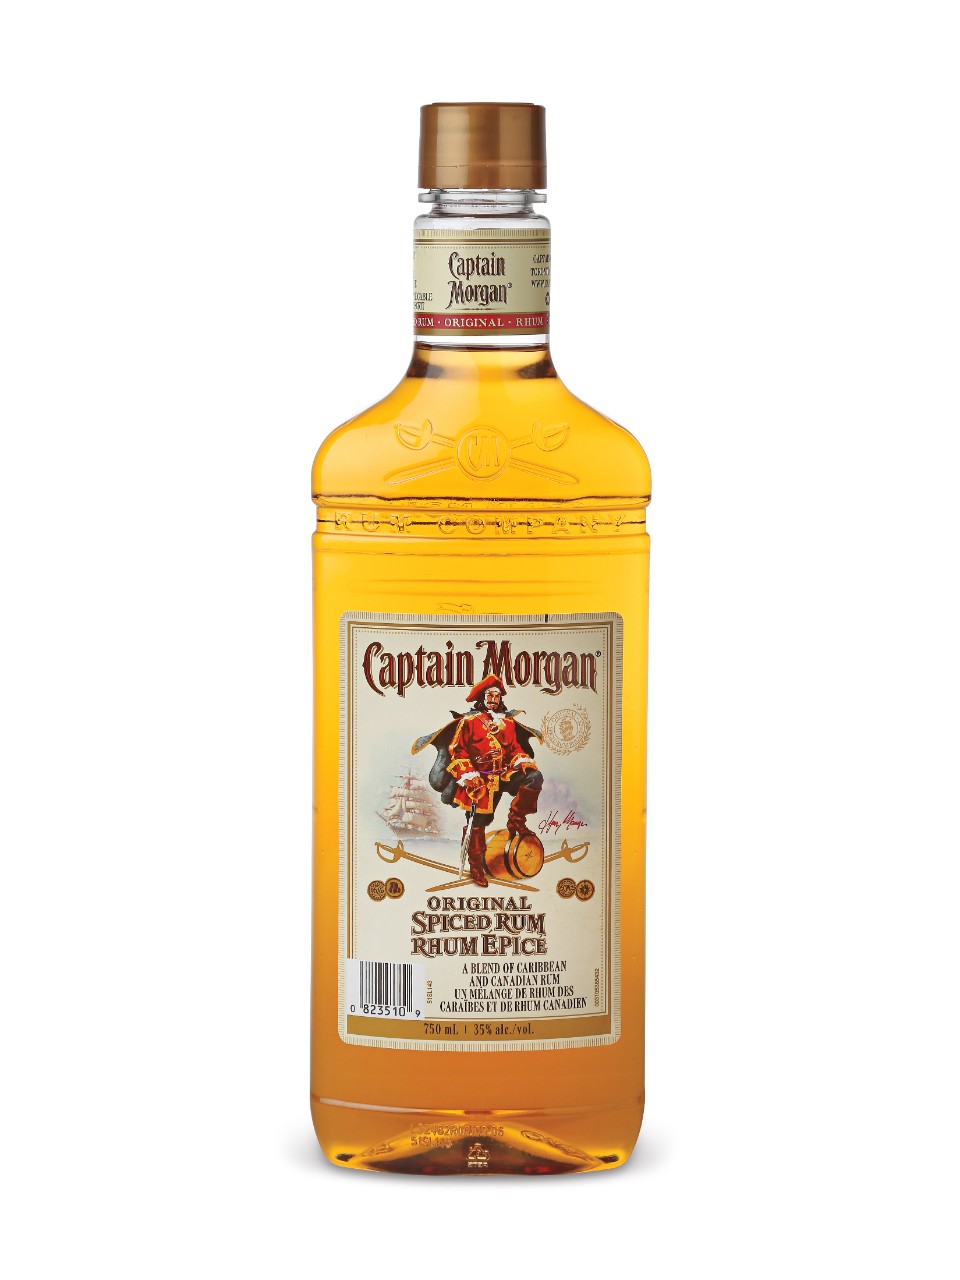 Captain Morgan Original Spiced Rum Pet